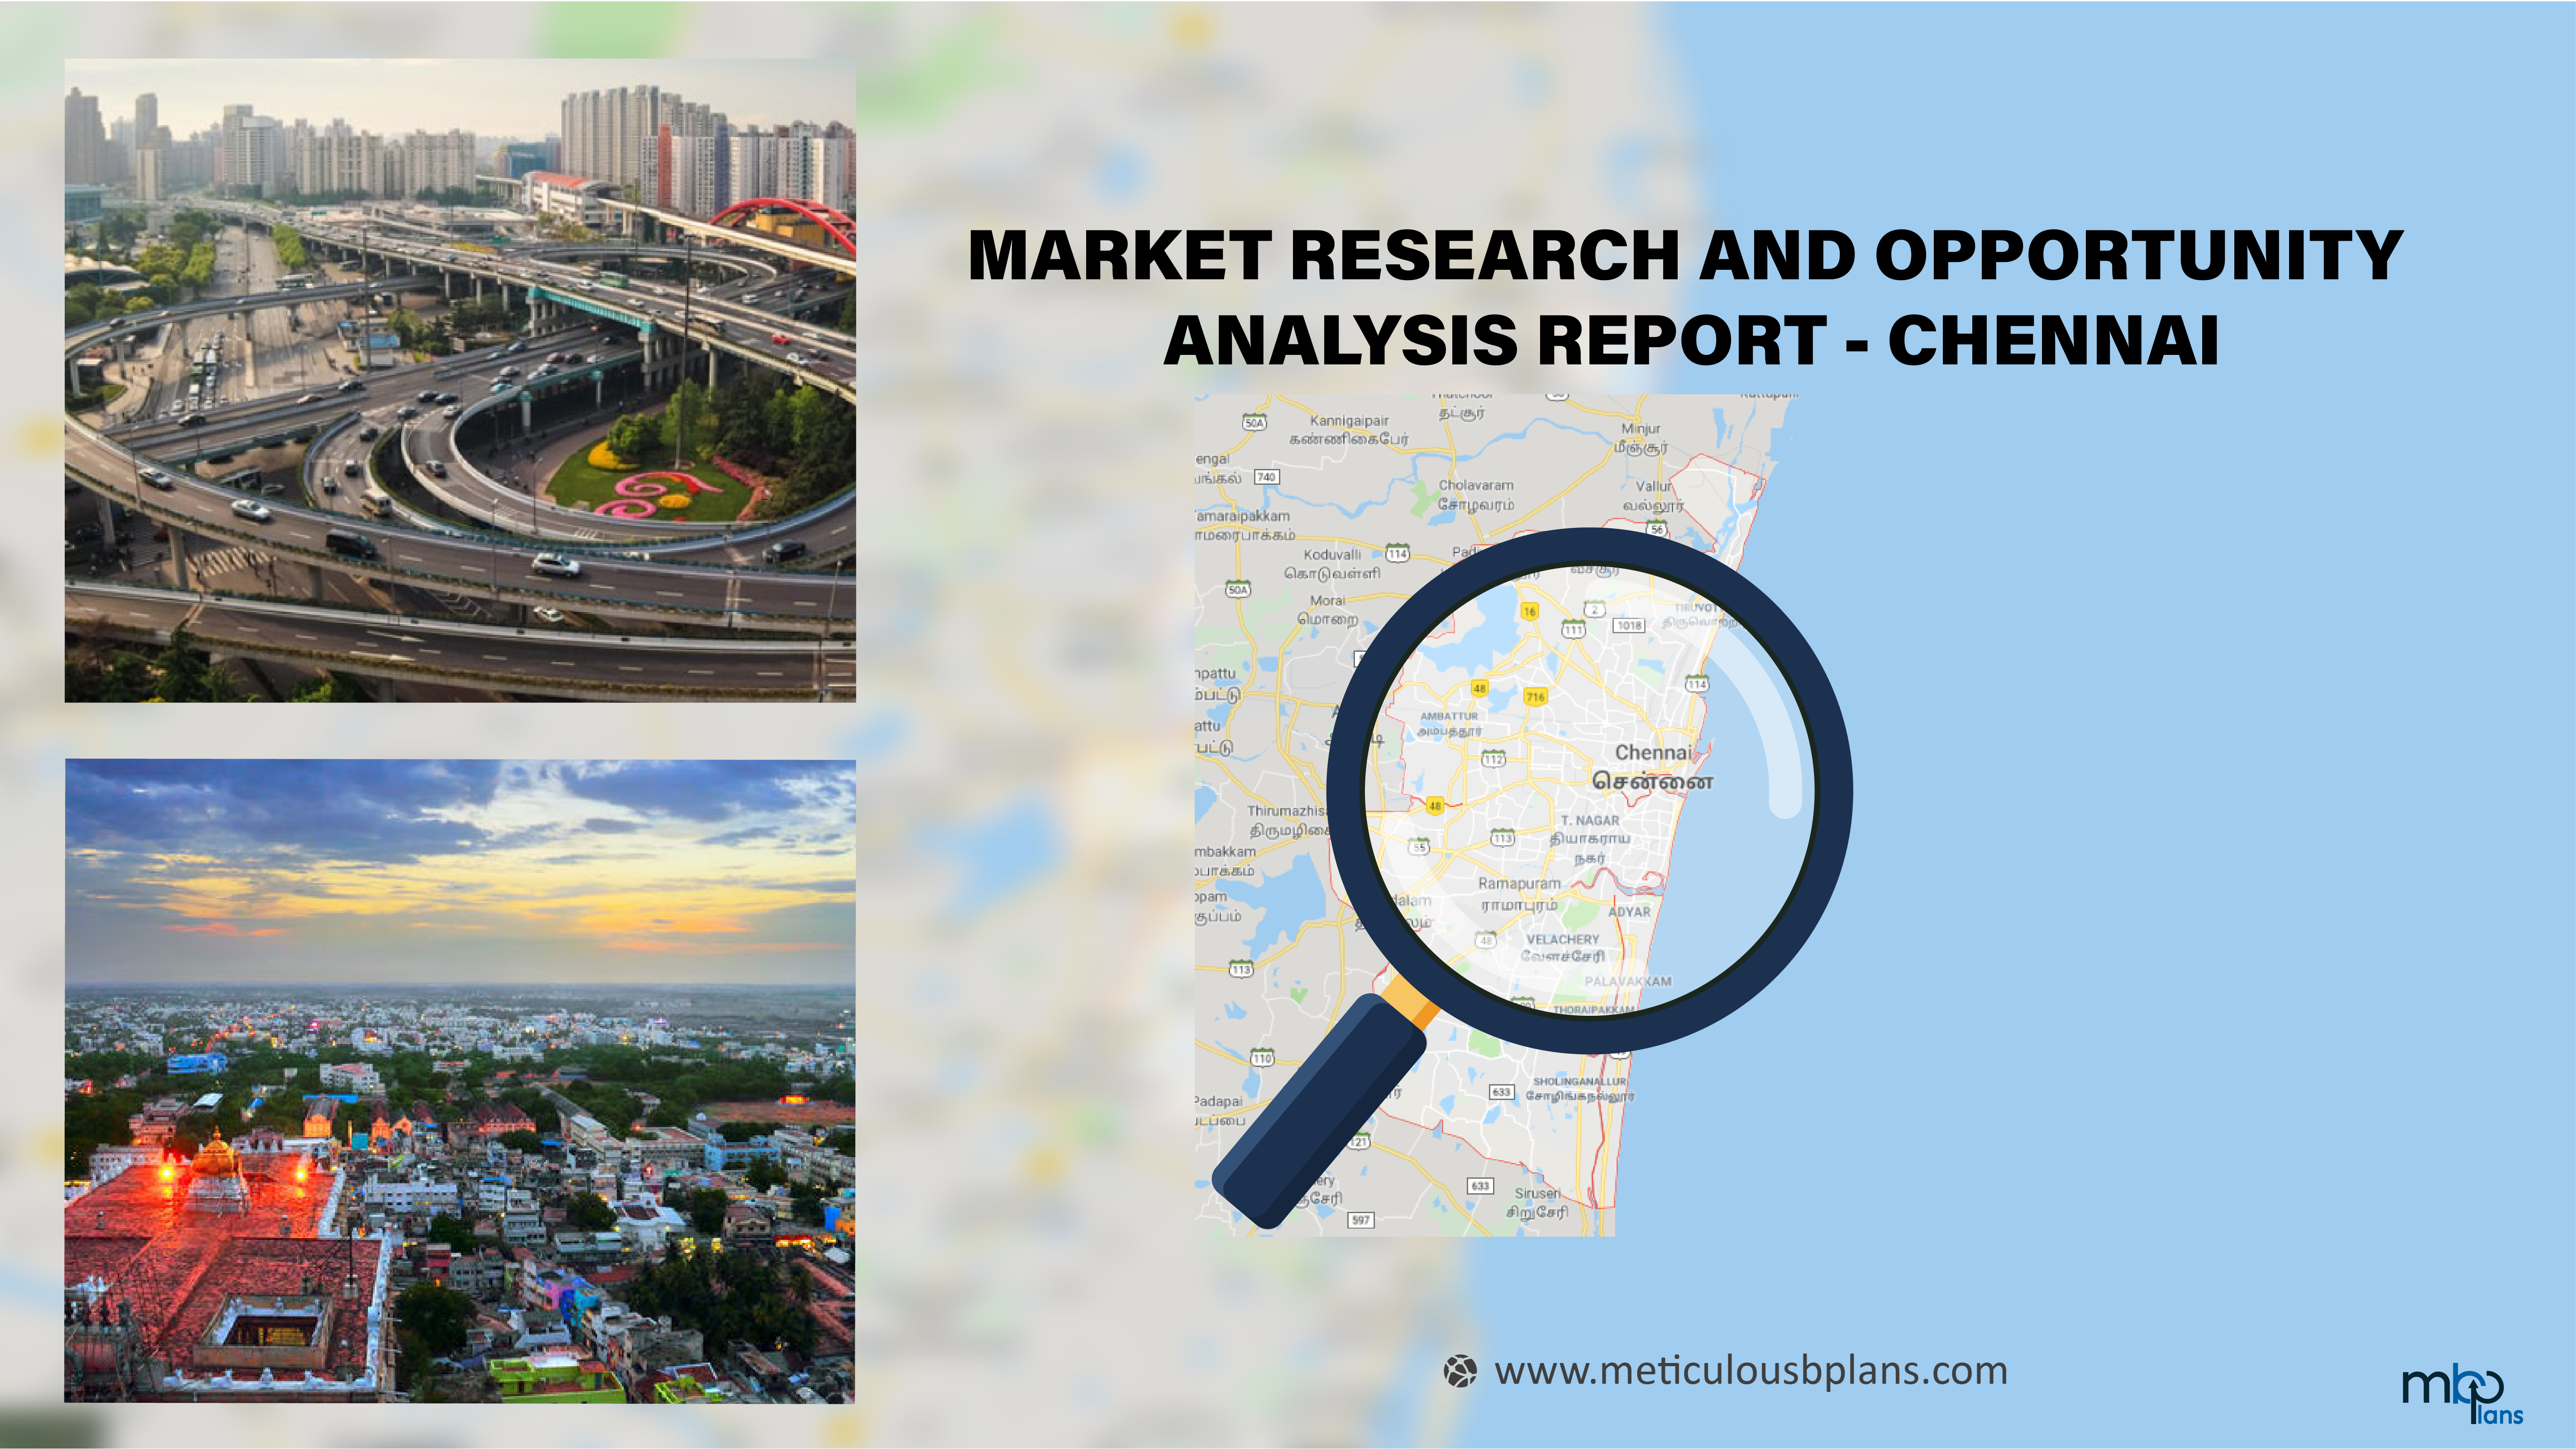 CHENNAI - Market Research